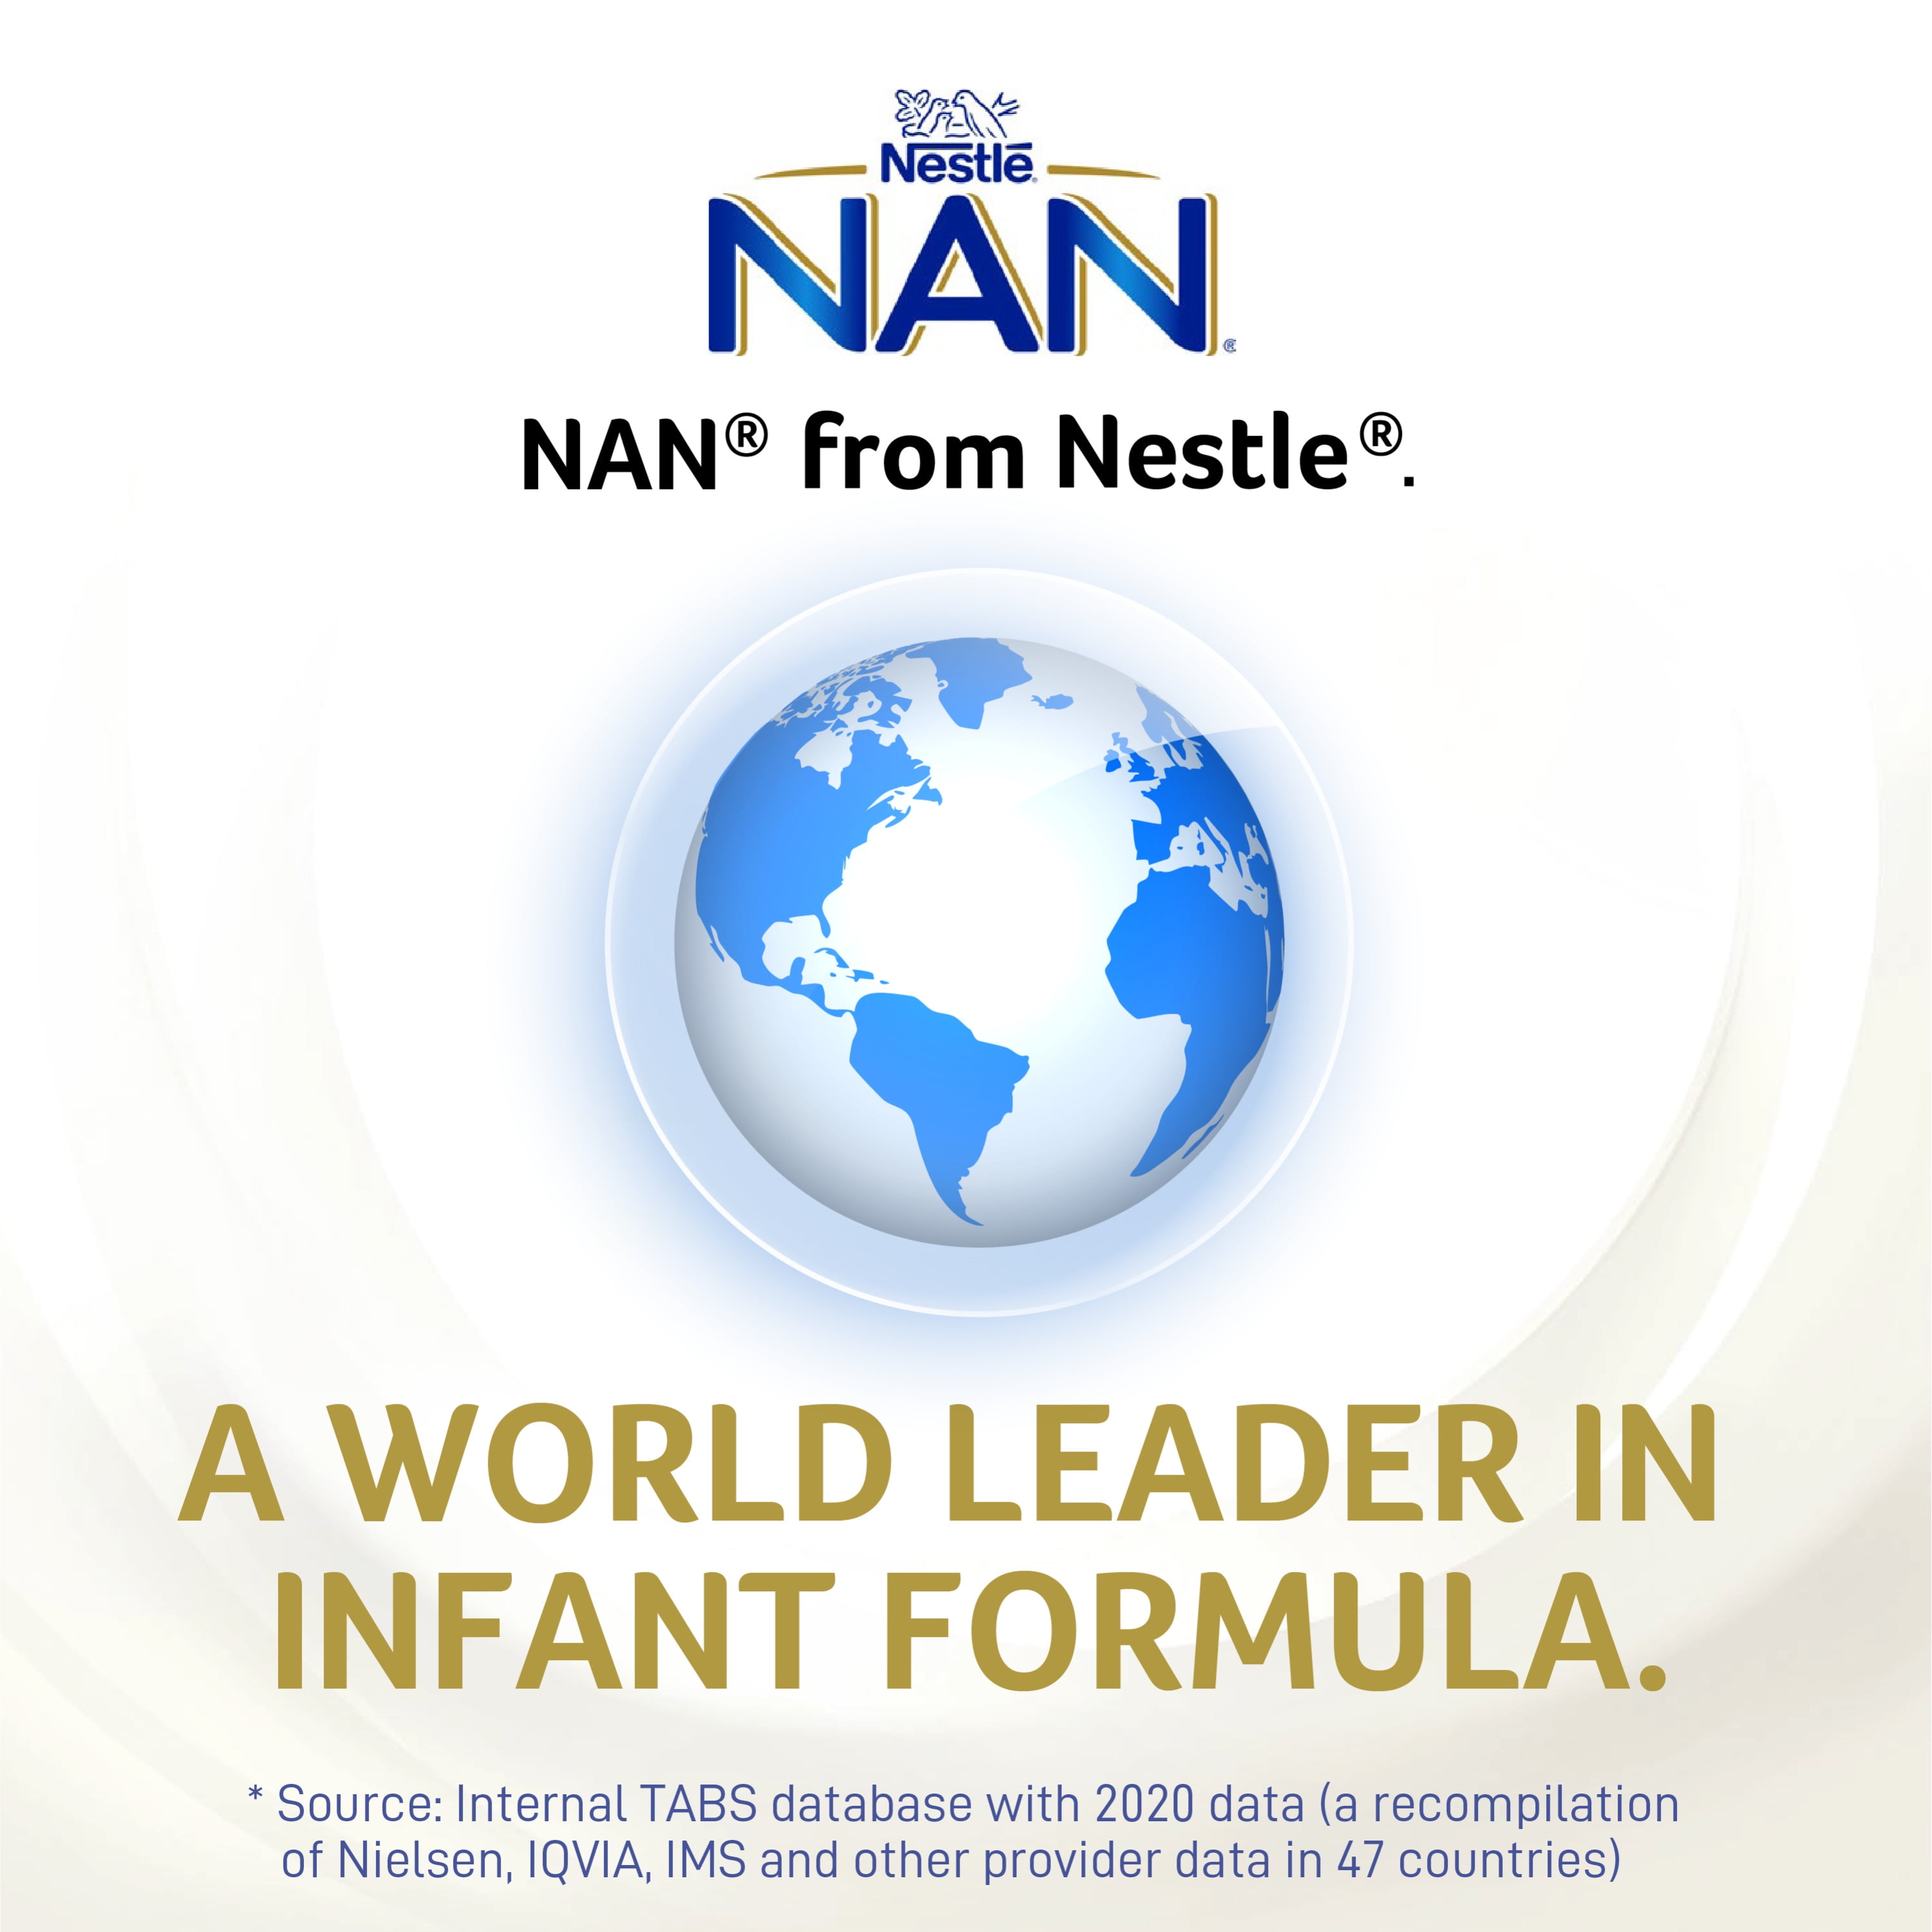 Nestlé NAN Pro 1 Powder Infant Formula, 28.2 oz, Can, (Pack of 6), Iron